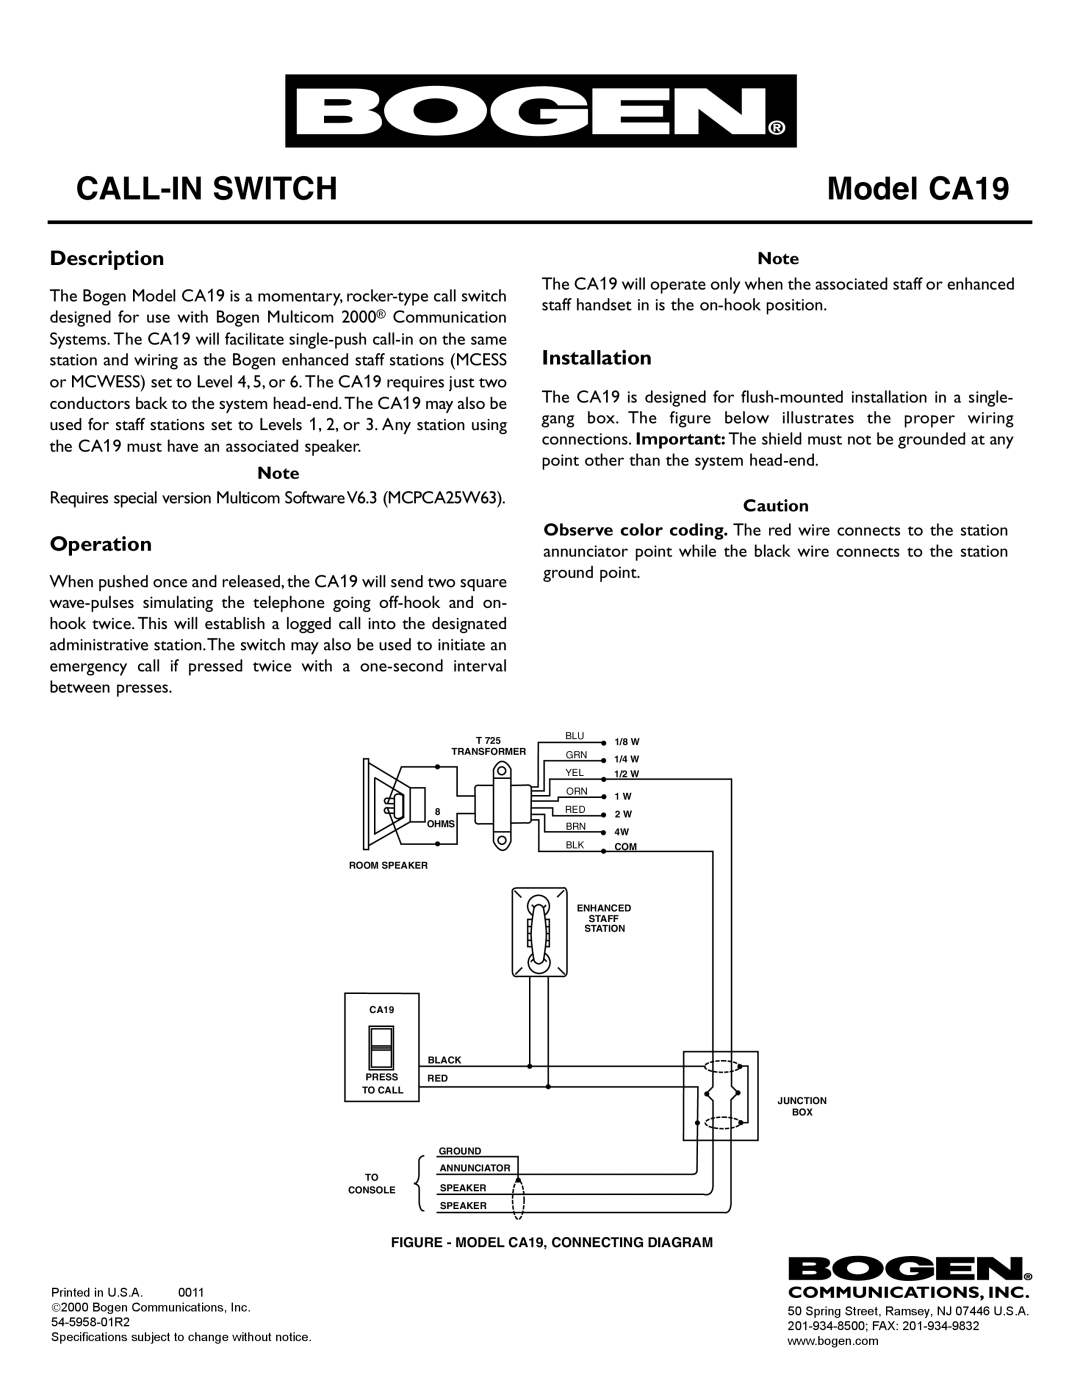 Bogen specifications Call-In Switch, Model CA19, Description, Operation, Installation 